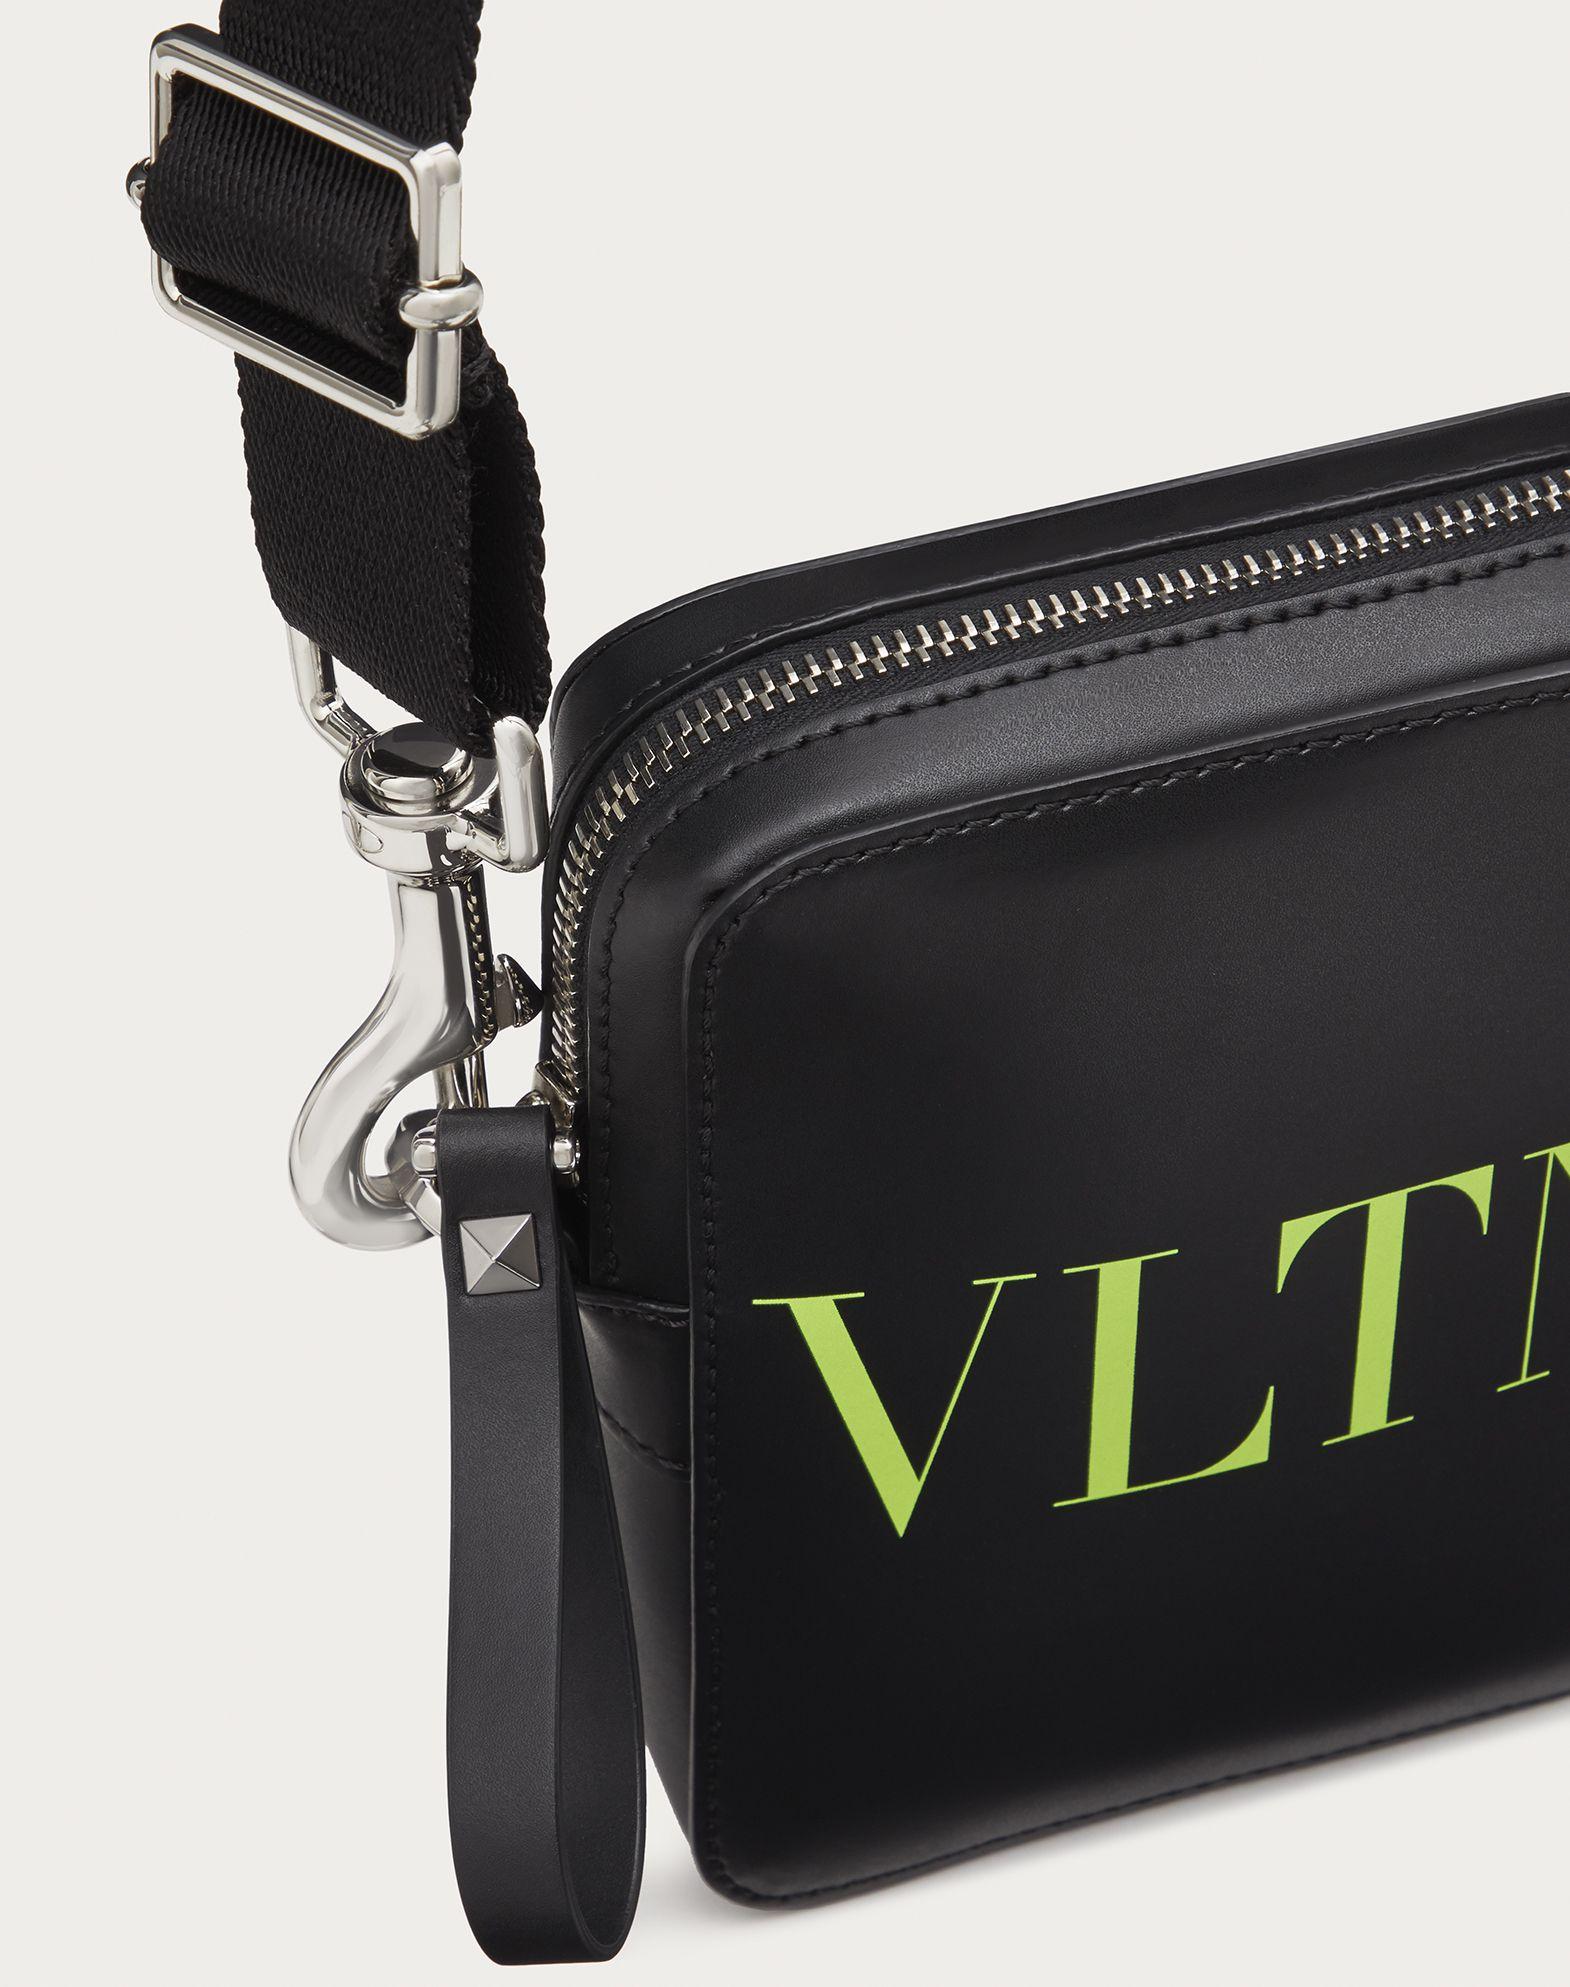 Valentino Garavani Small Vltn Leather Crossbody Bag in Black/Neon ...